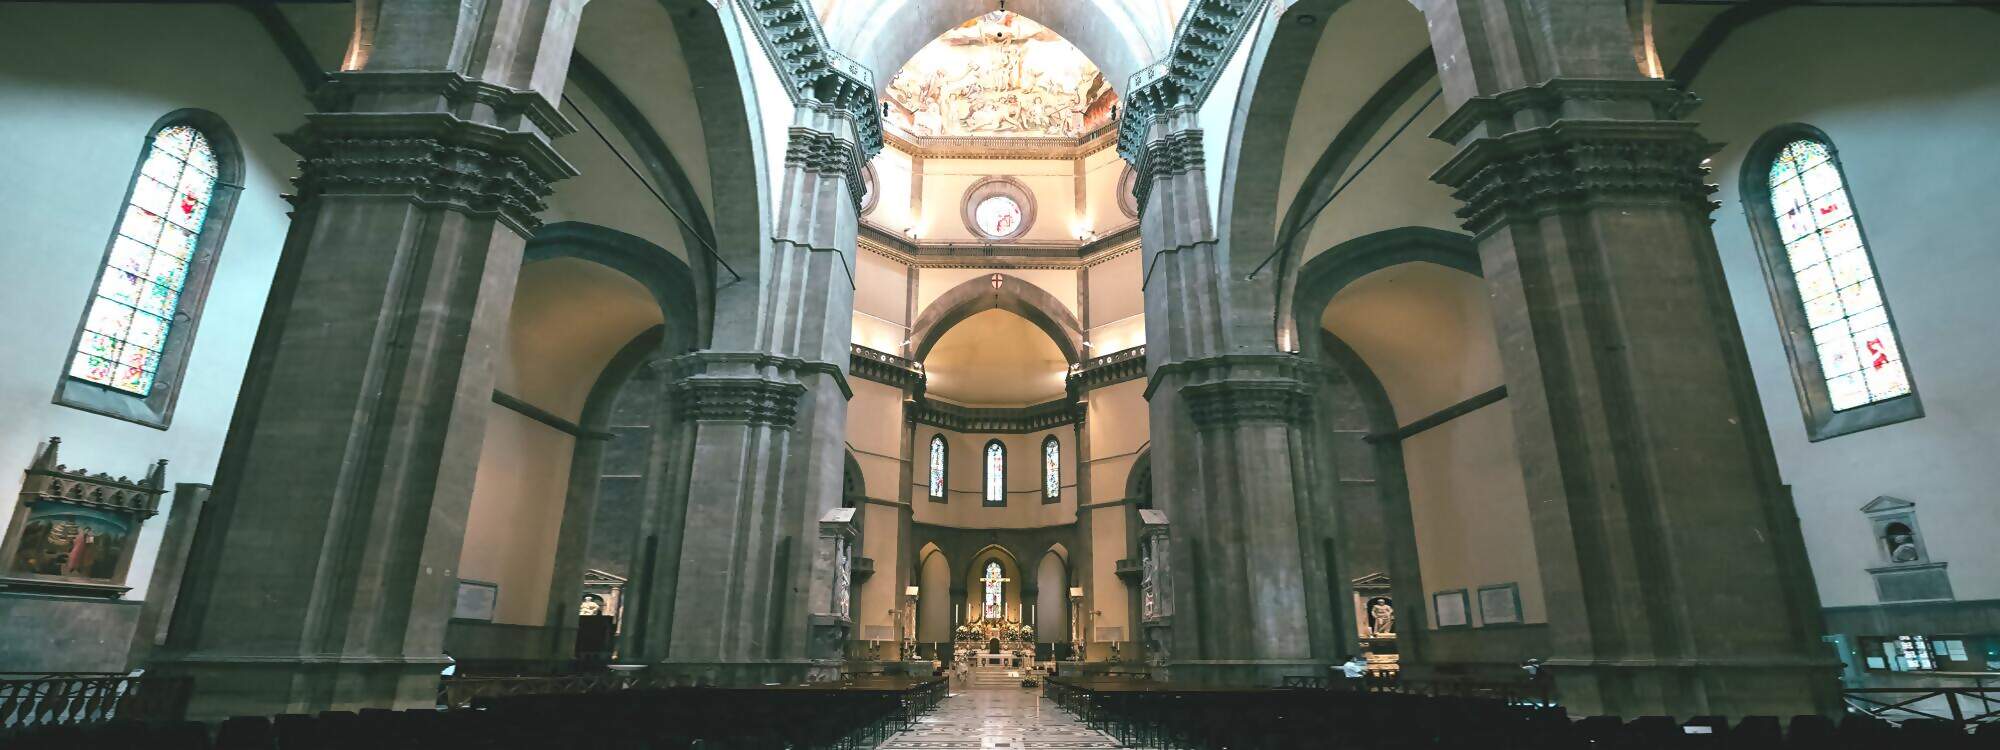 Basílica de Santa María - Florenz